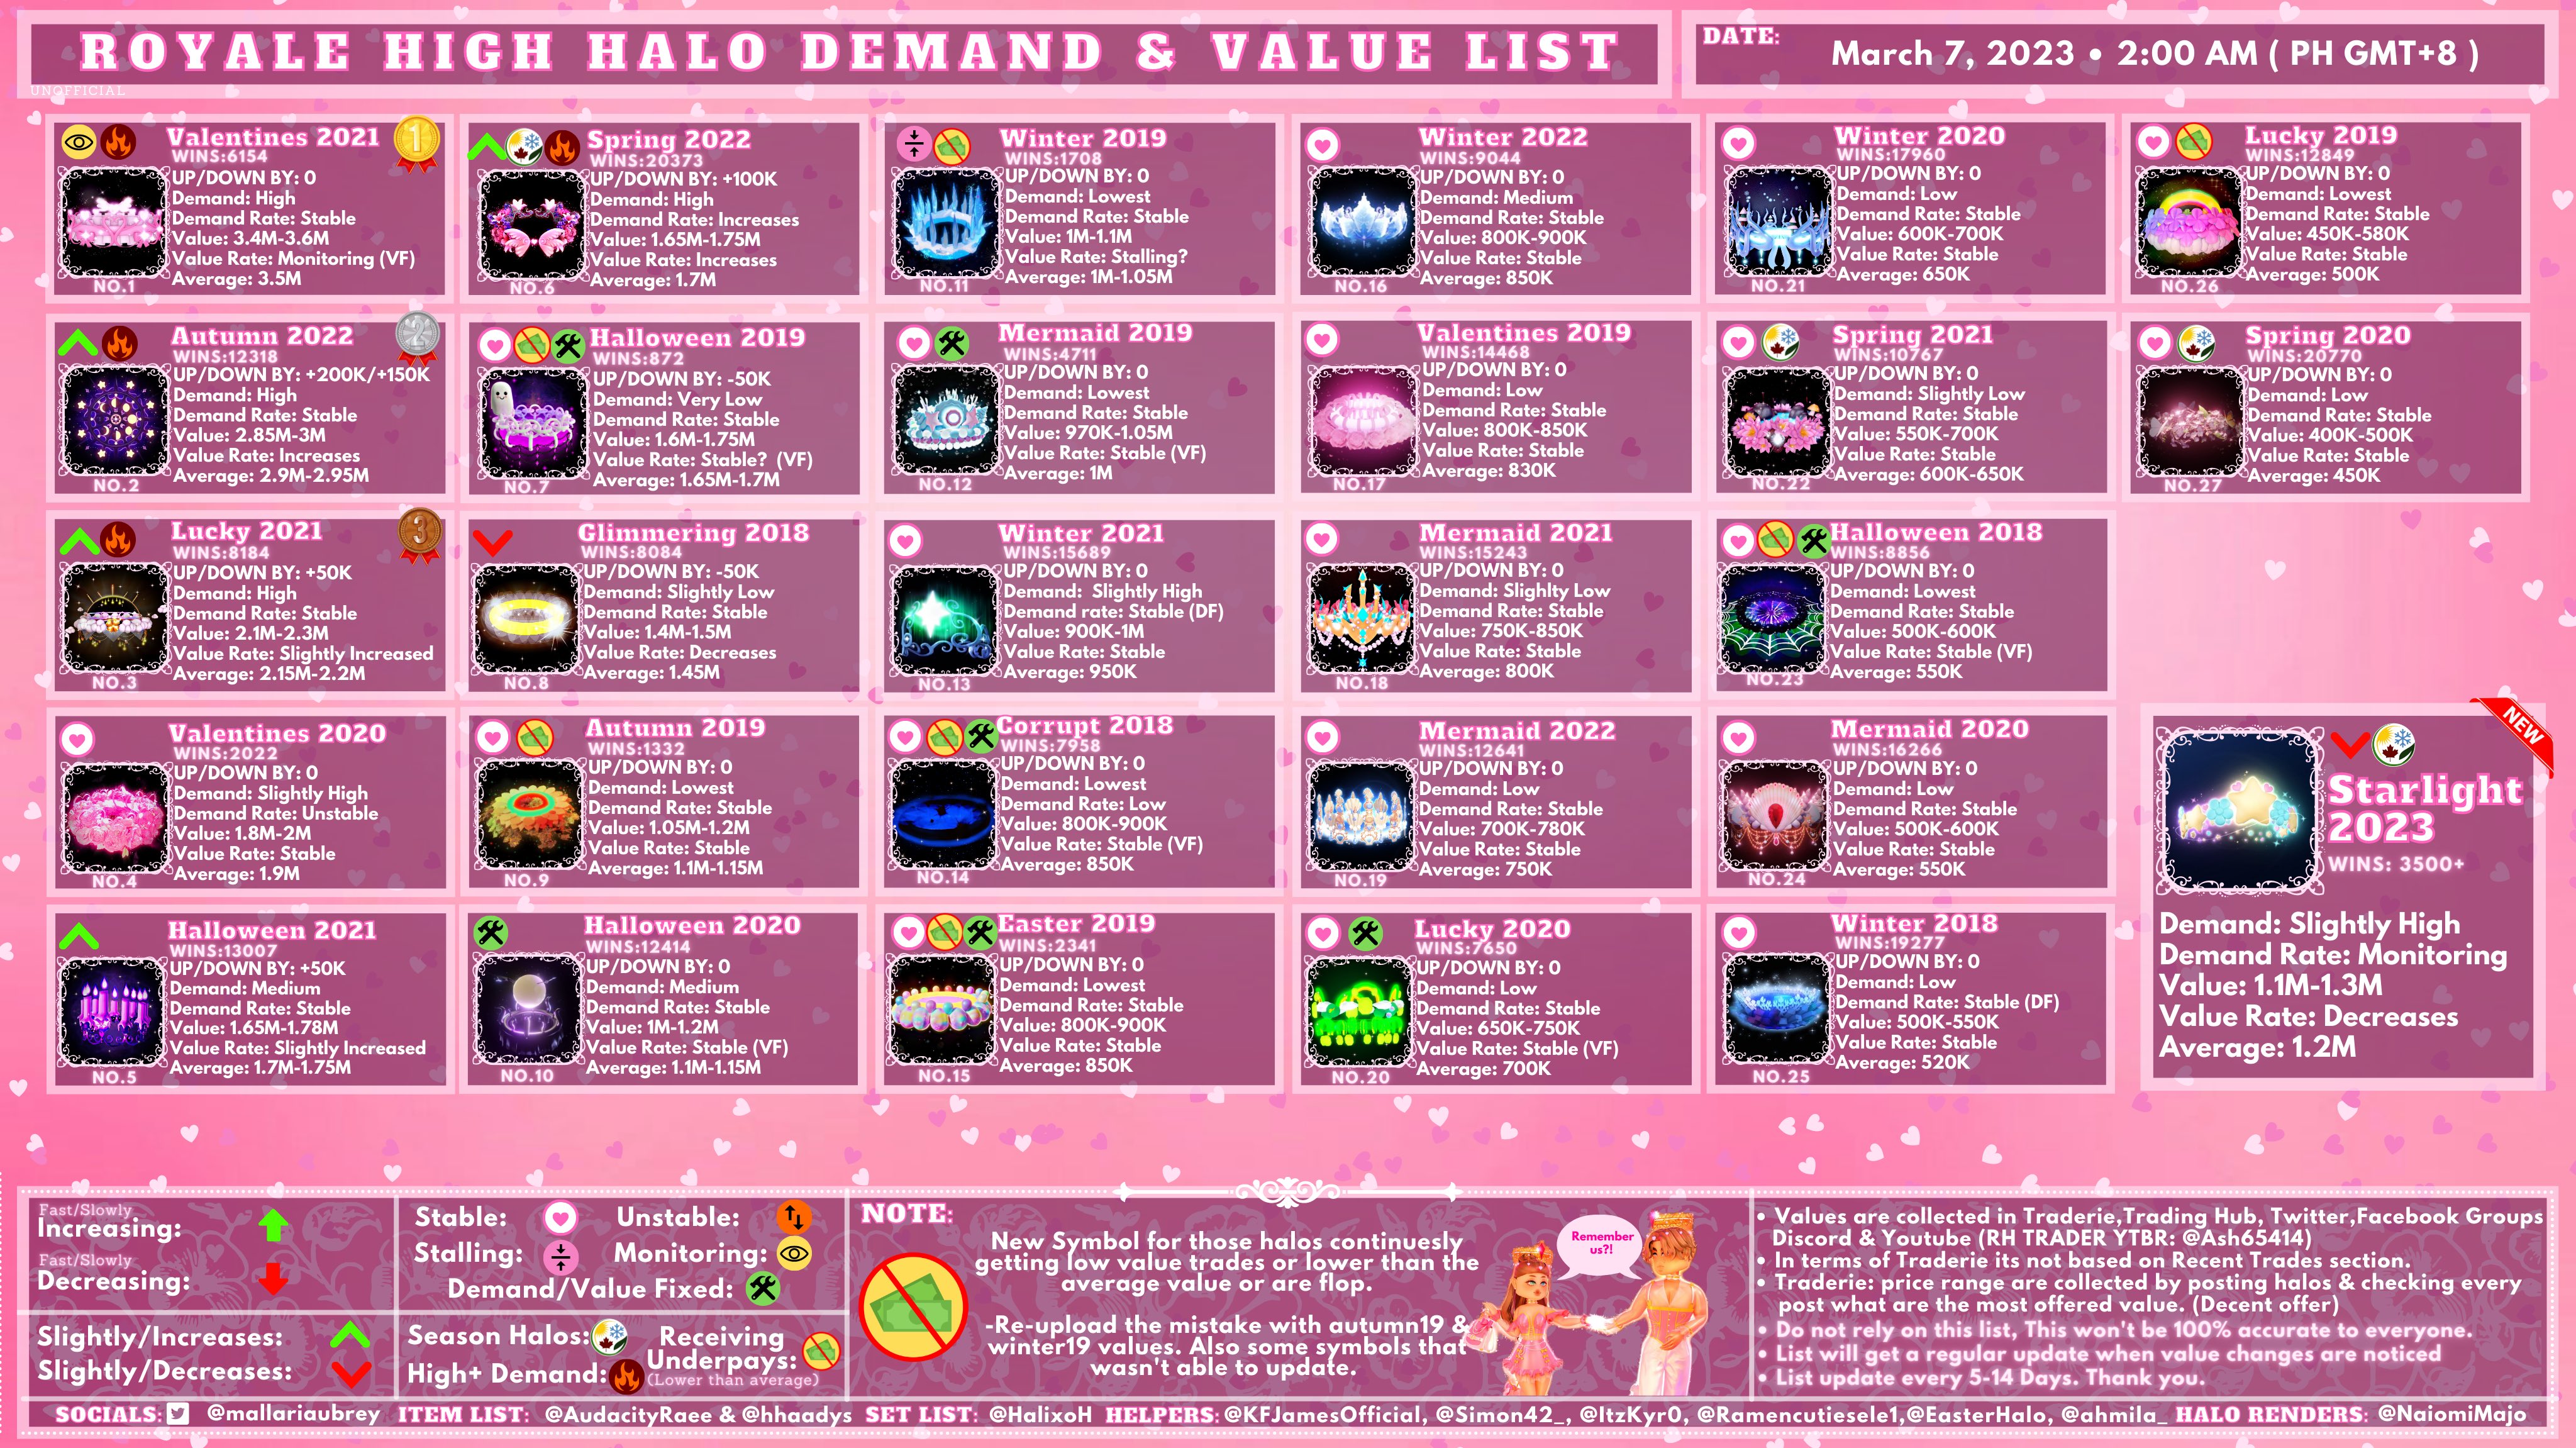 Mals Halo Teir List!! Royale High Halos - Royale High Regal in 2023